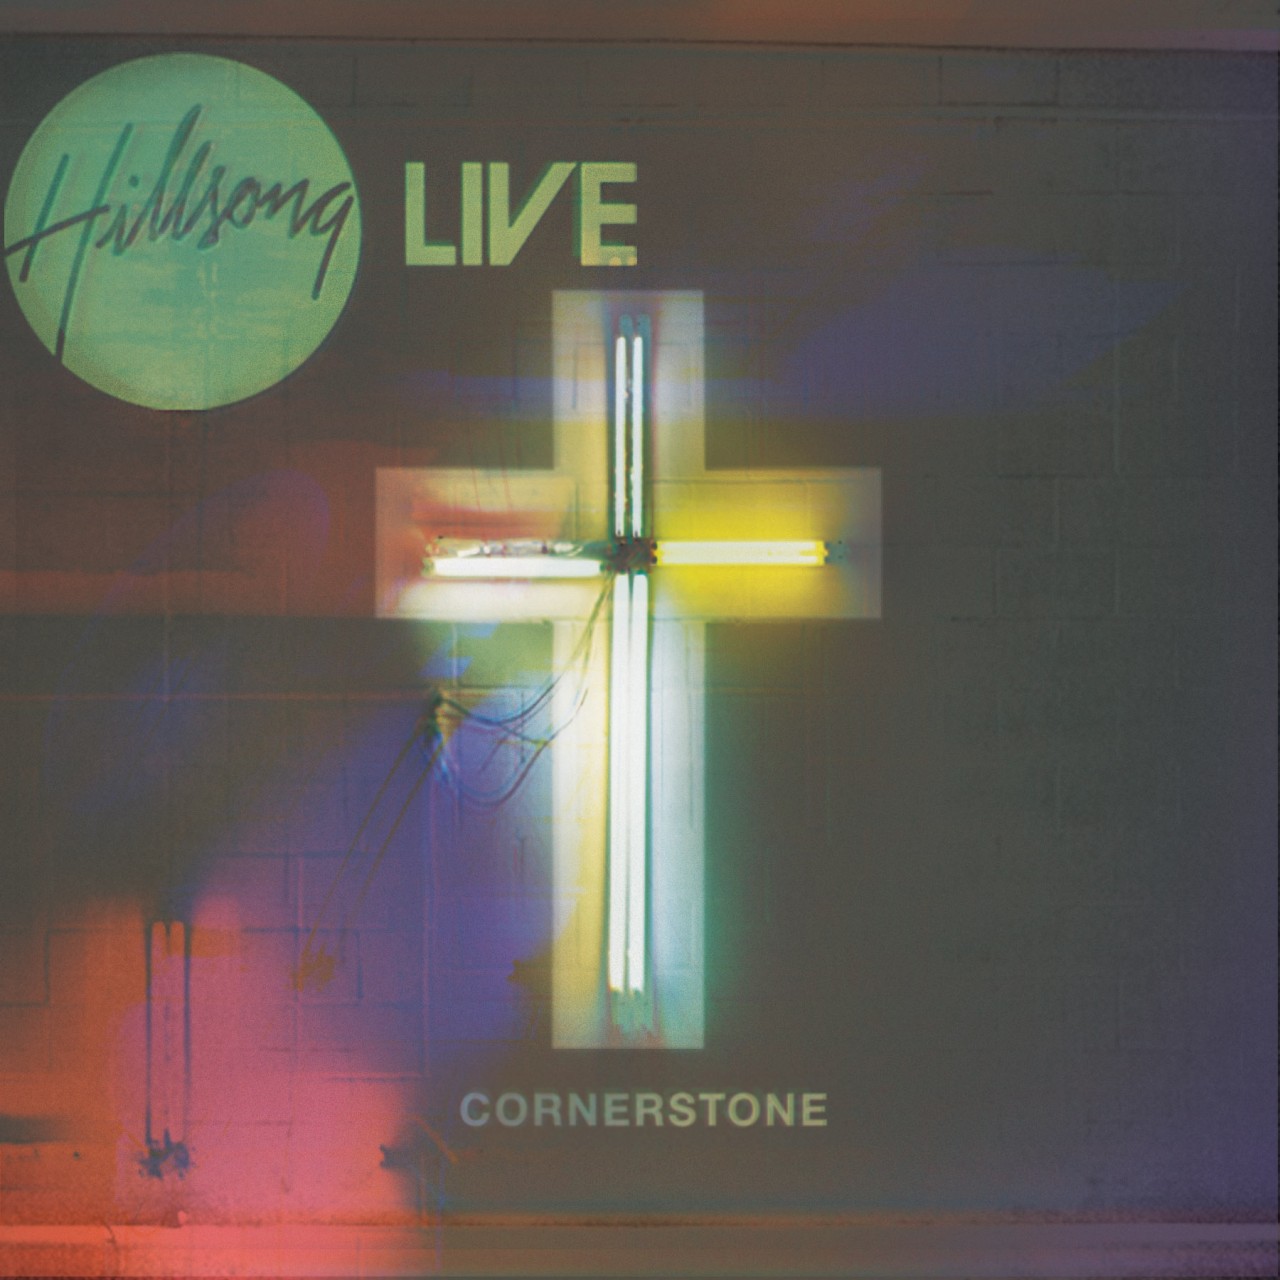 Hillsong Live Cornerstone Album Cover